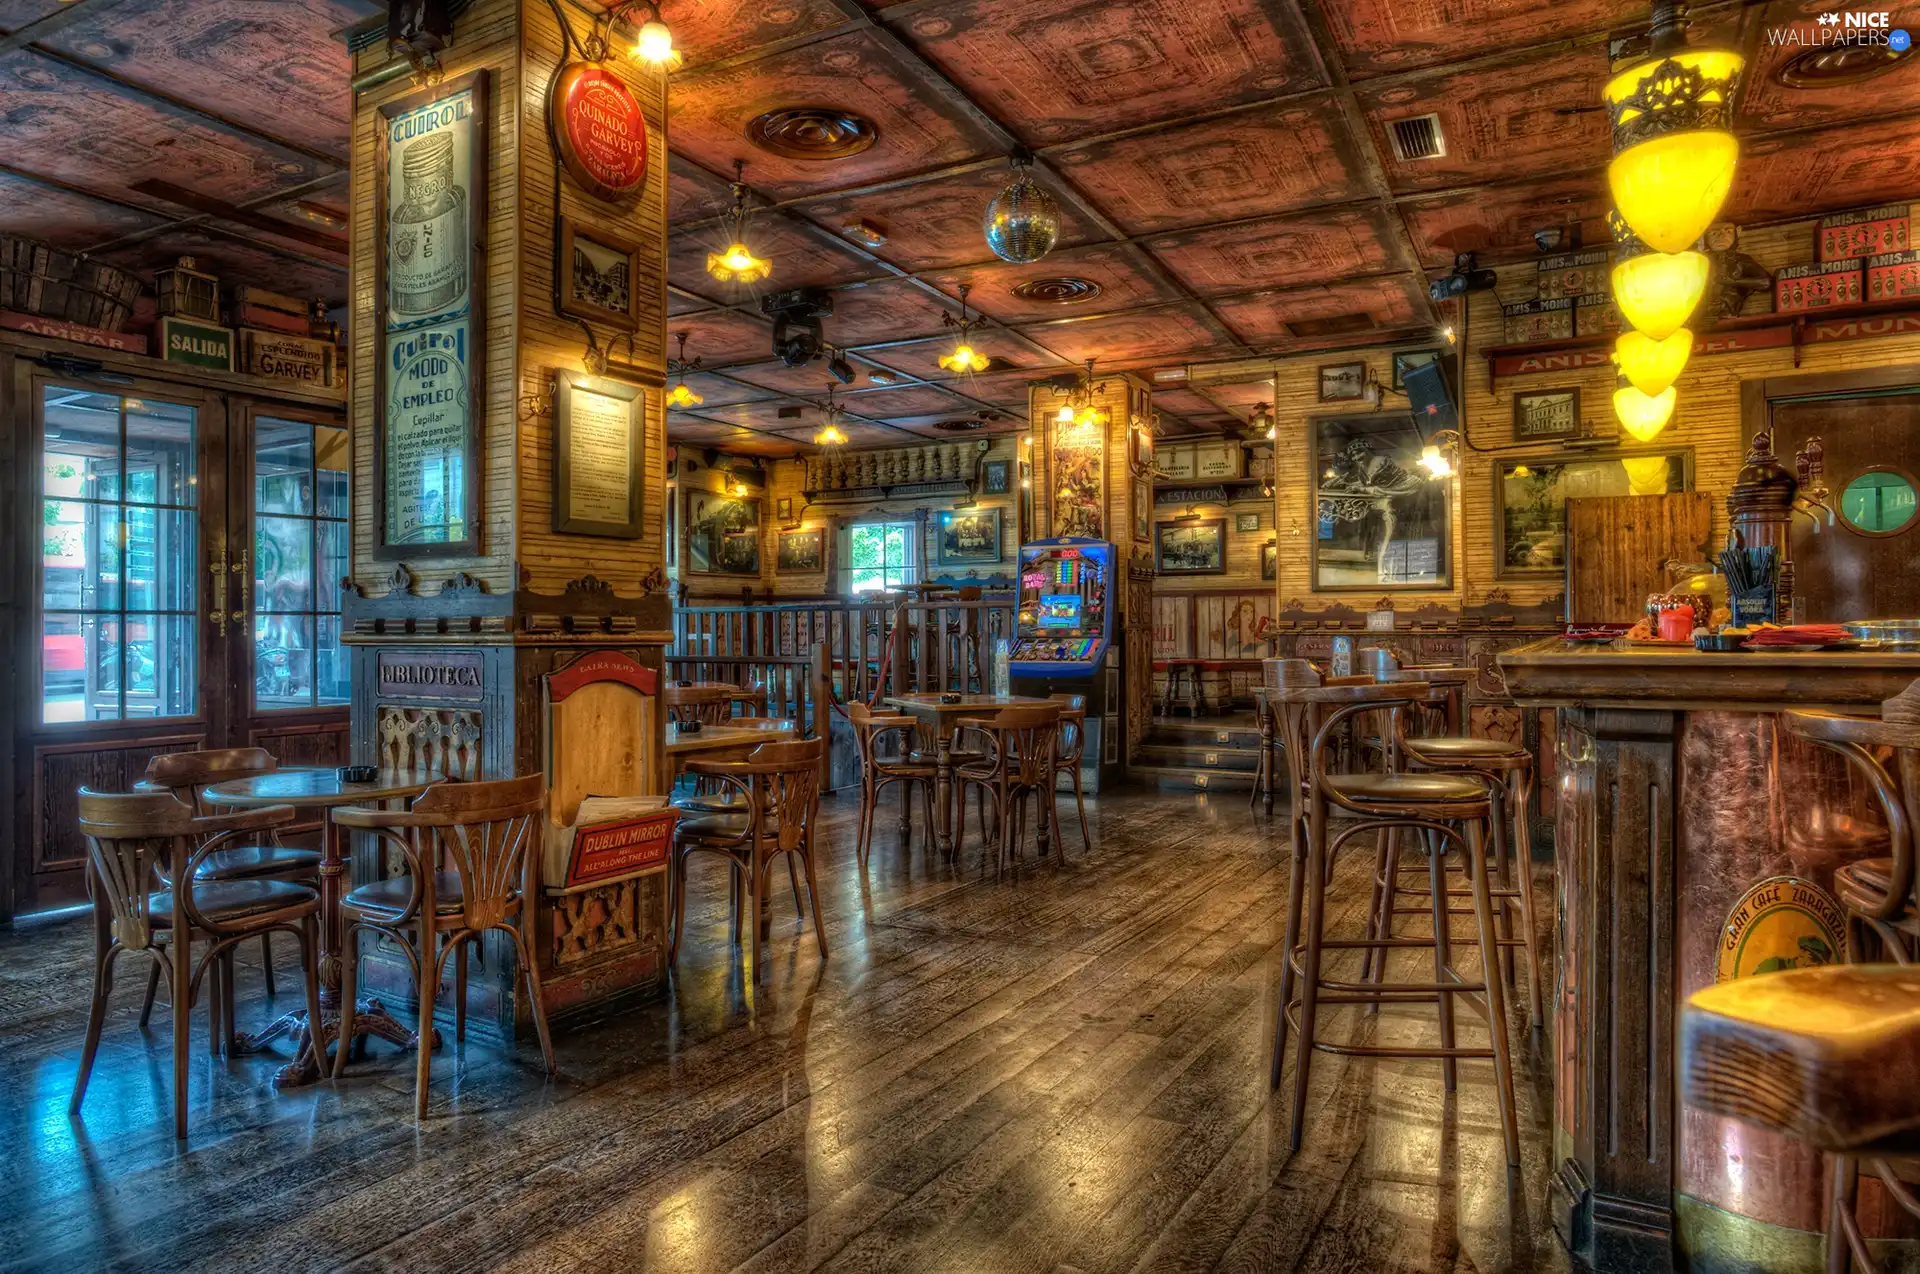 Restaurant, Stool, Bar, Tables